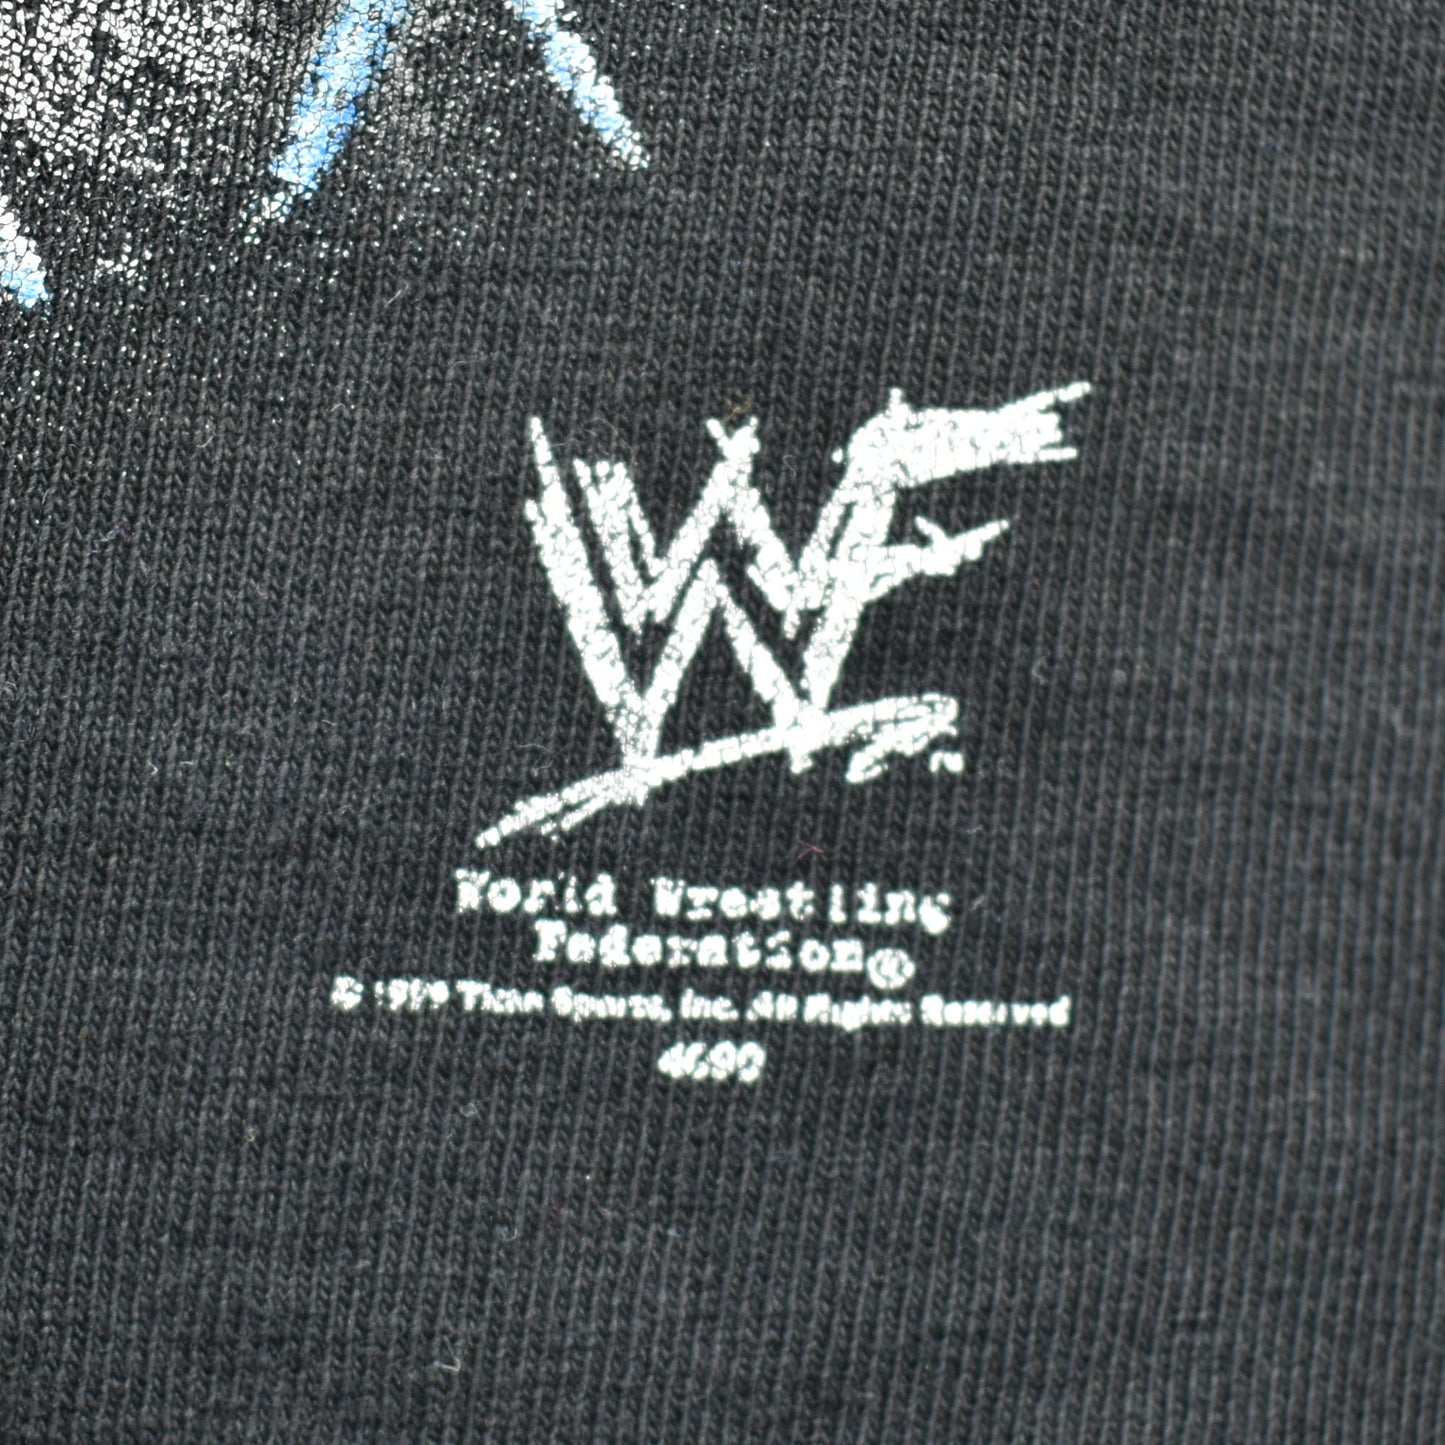 Vintage 1999 The Rock WWE Professional Hardcore Wrestler T-shirt